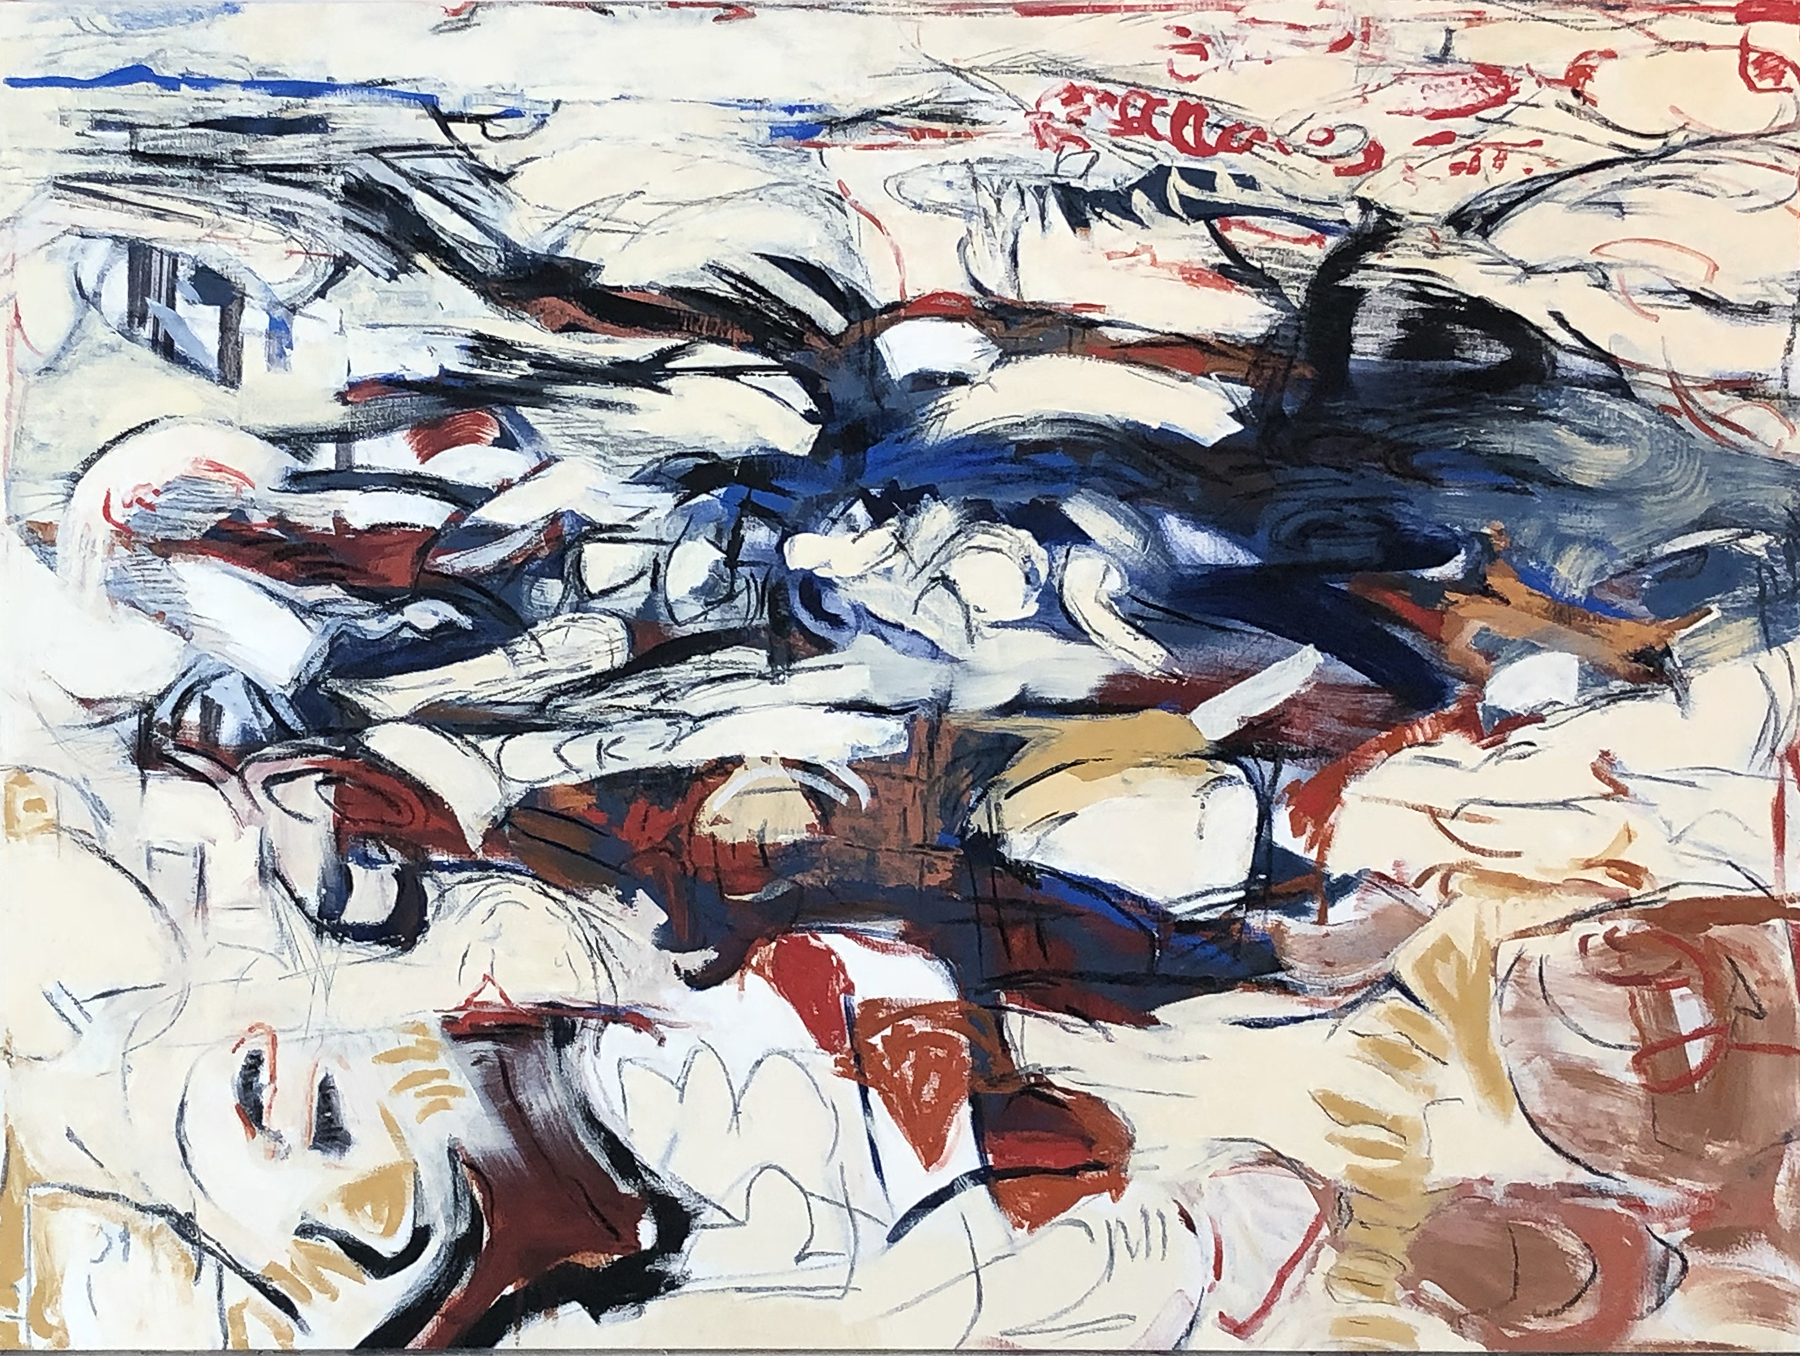  Osterman,  Tidal Pool,   Oil on canvas, 42x56 